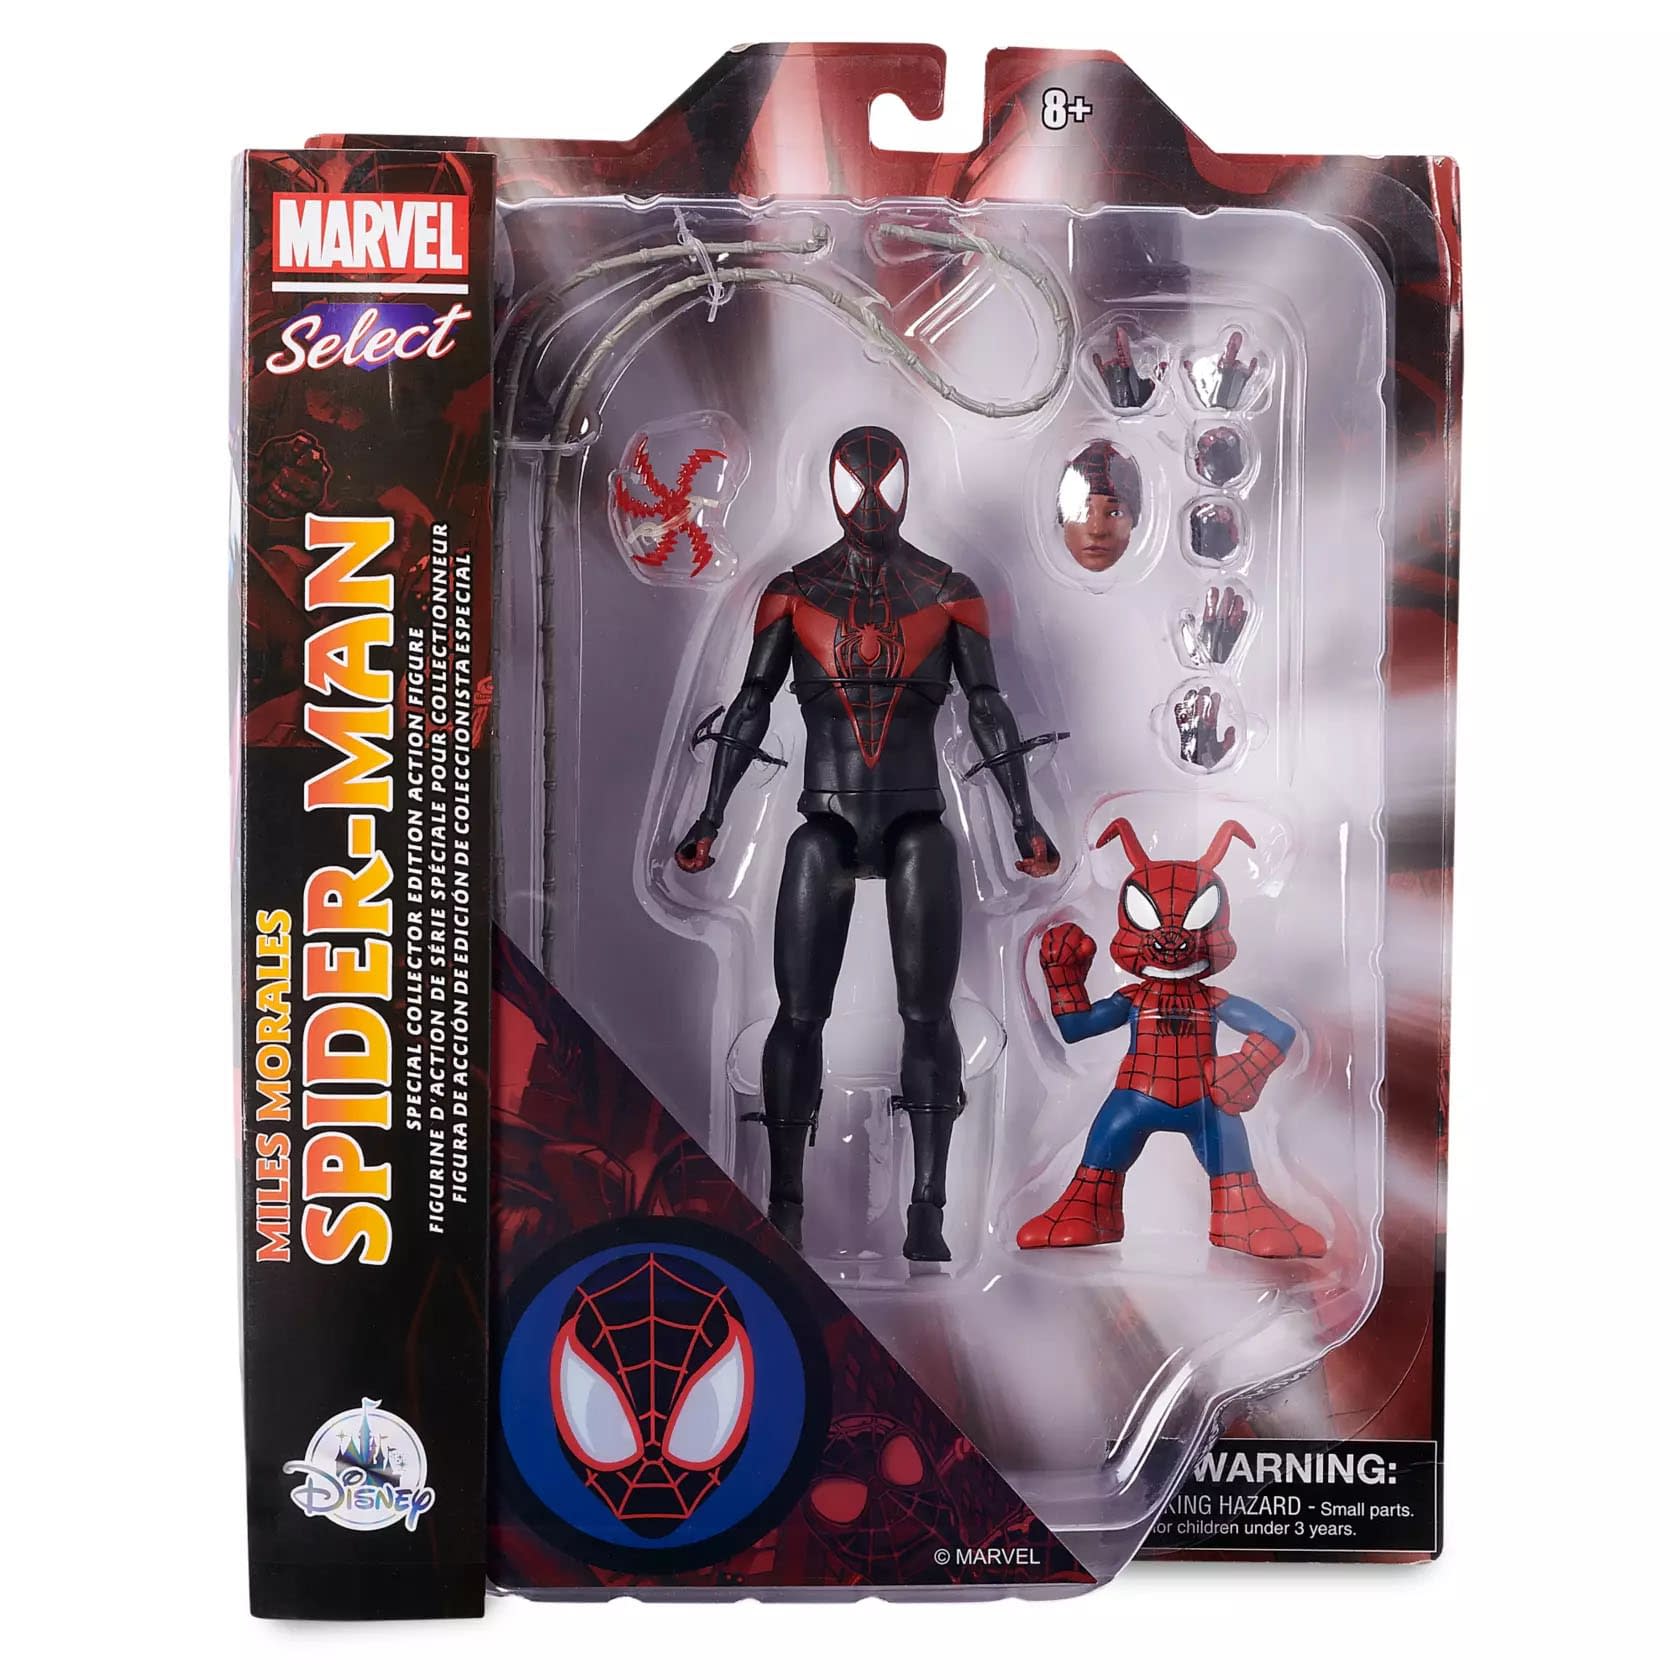 Diamond Select Toys Debuts Odd Spider-Man Miles Morales Figure